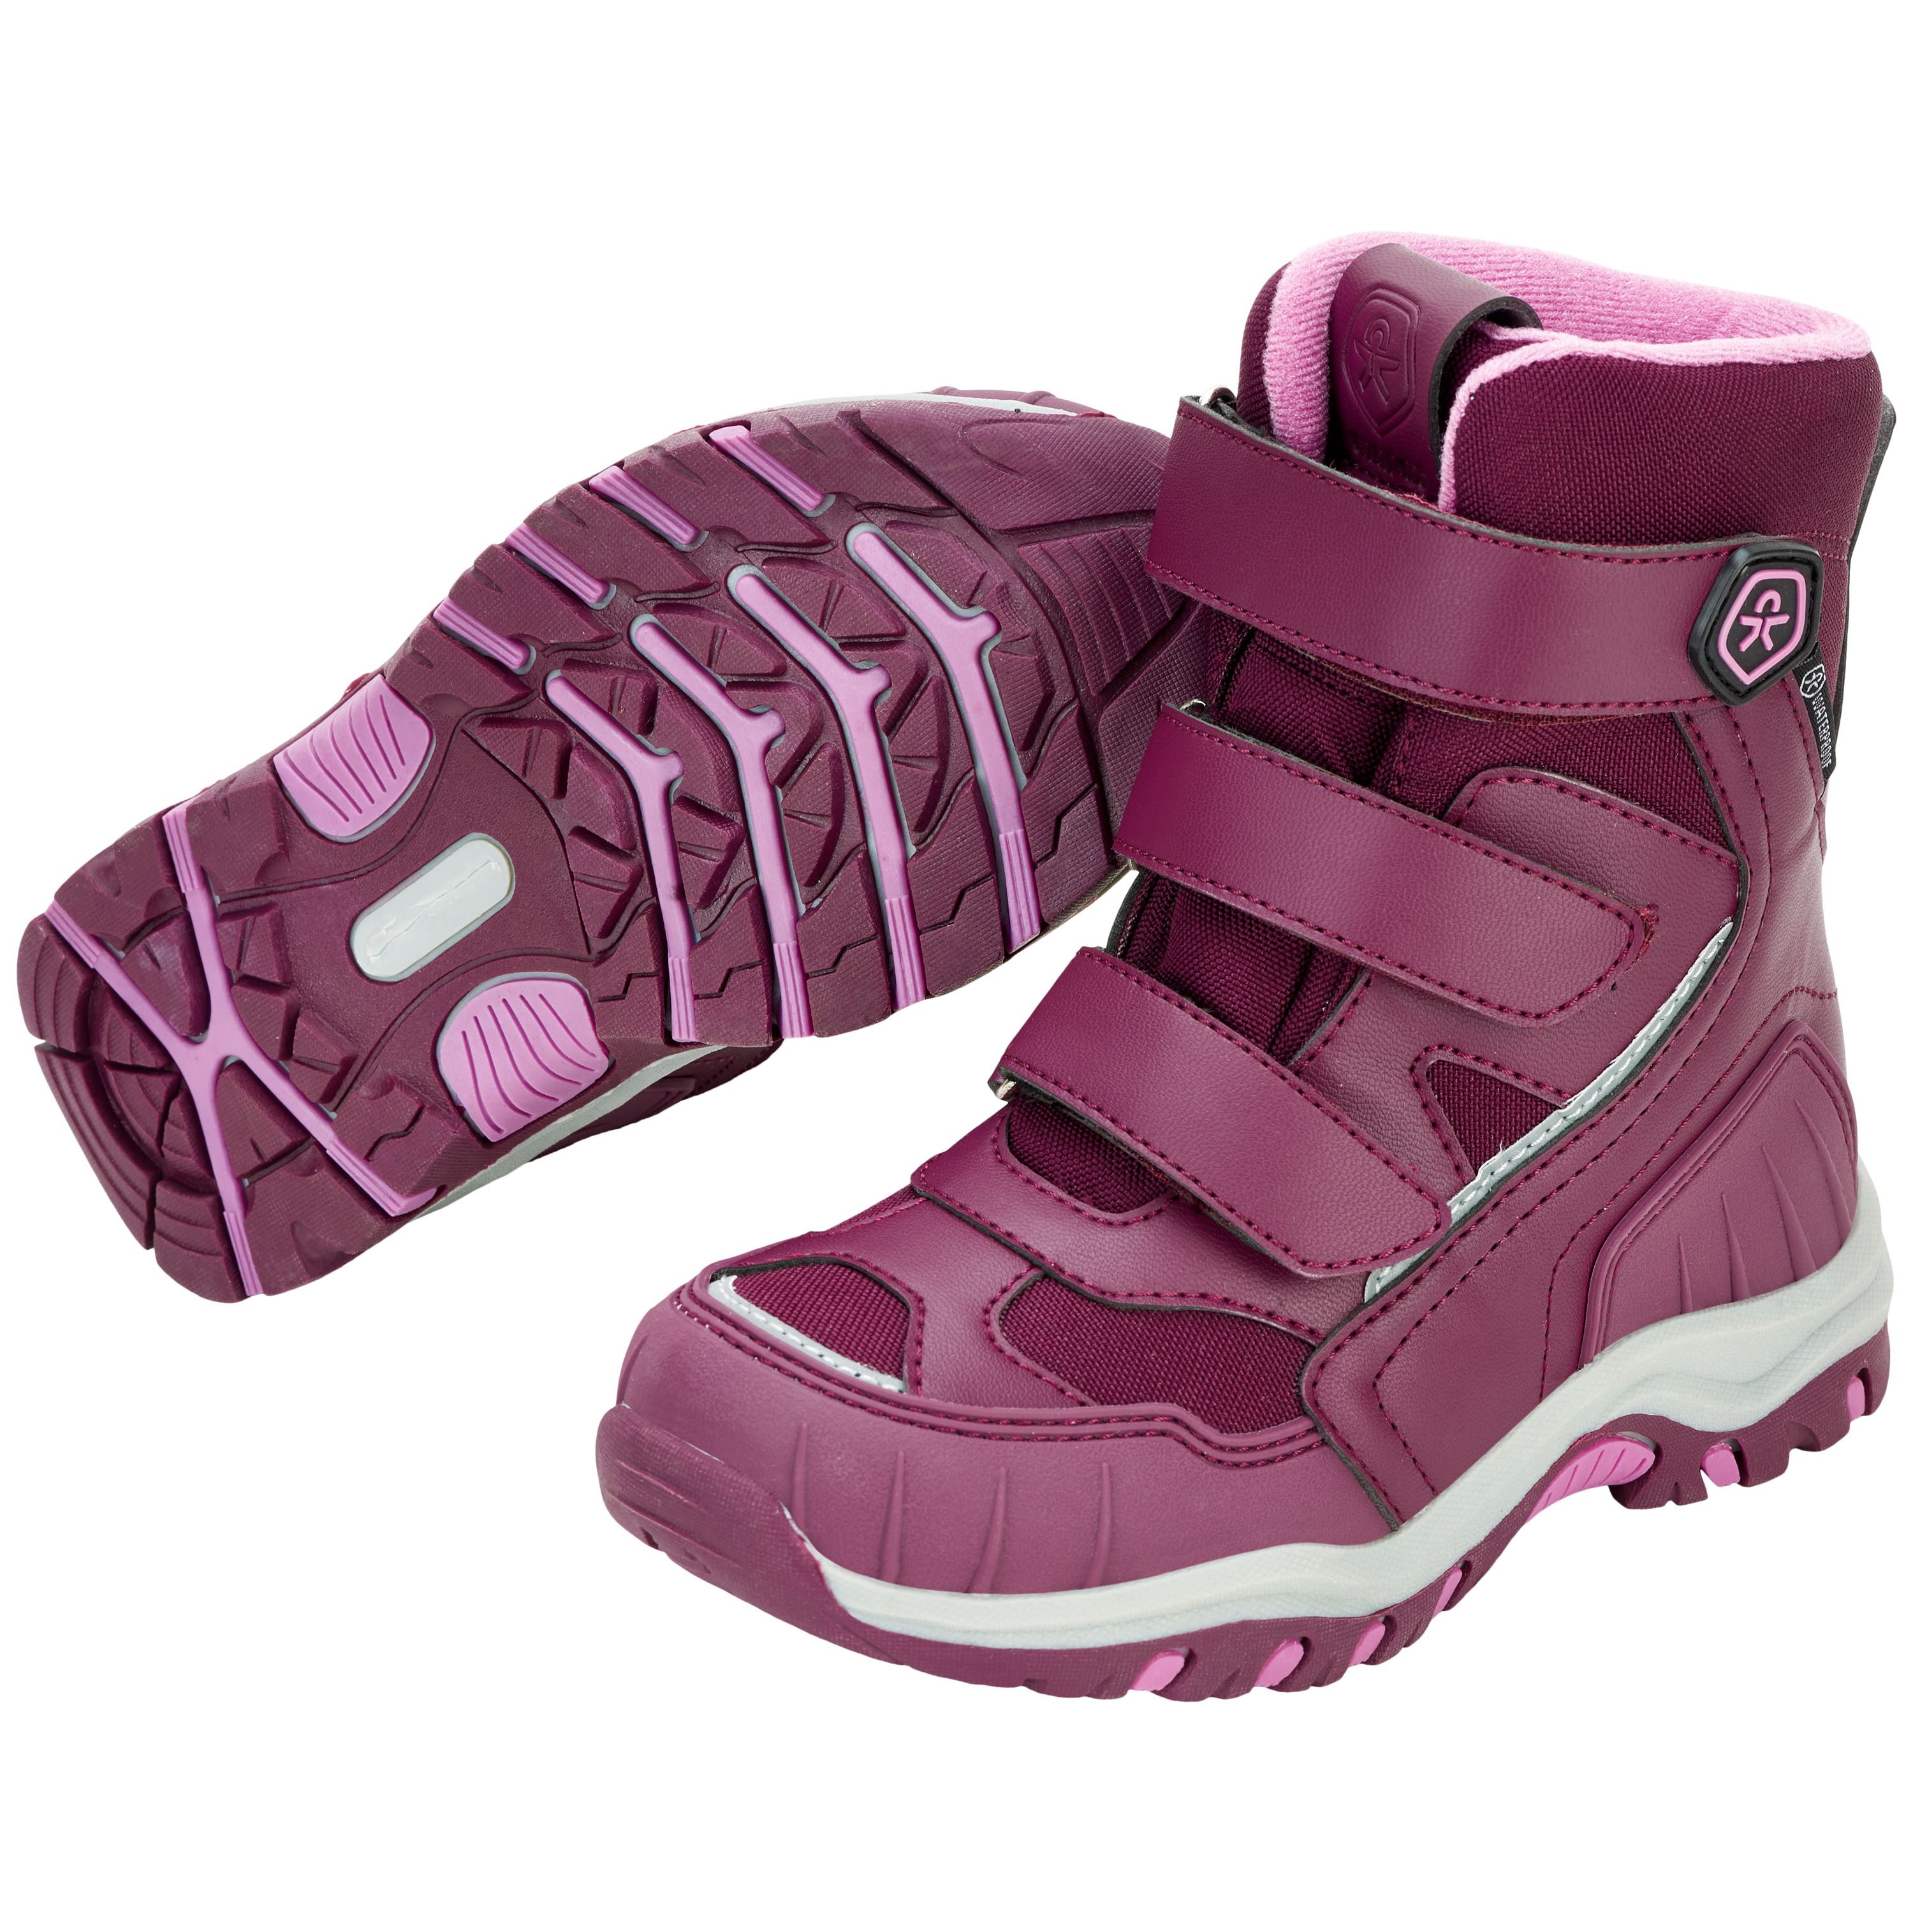 Boots high cut w. 3 velcro, WP, potent purple, size 35